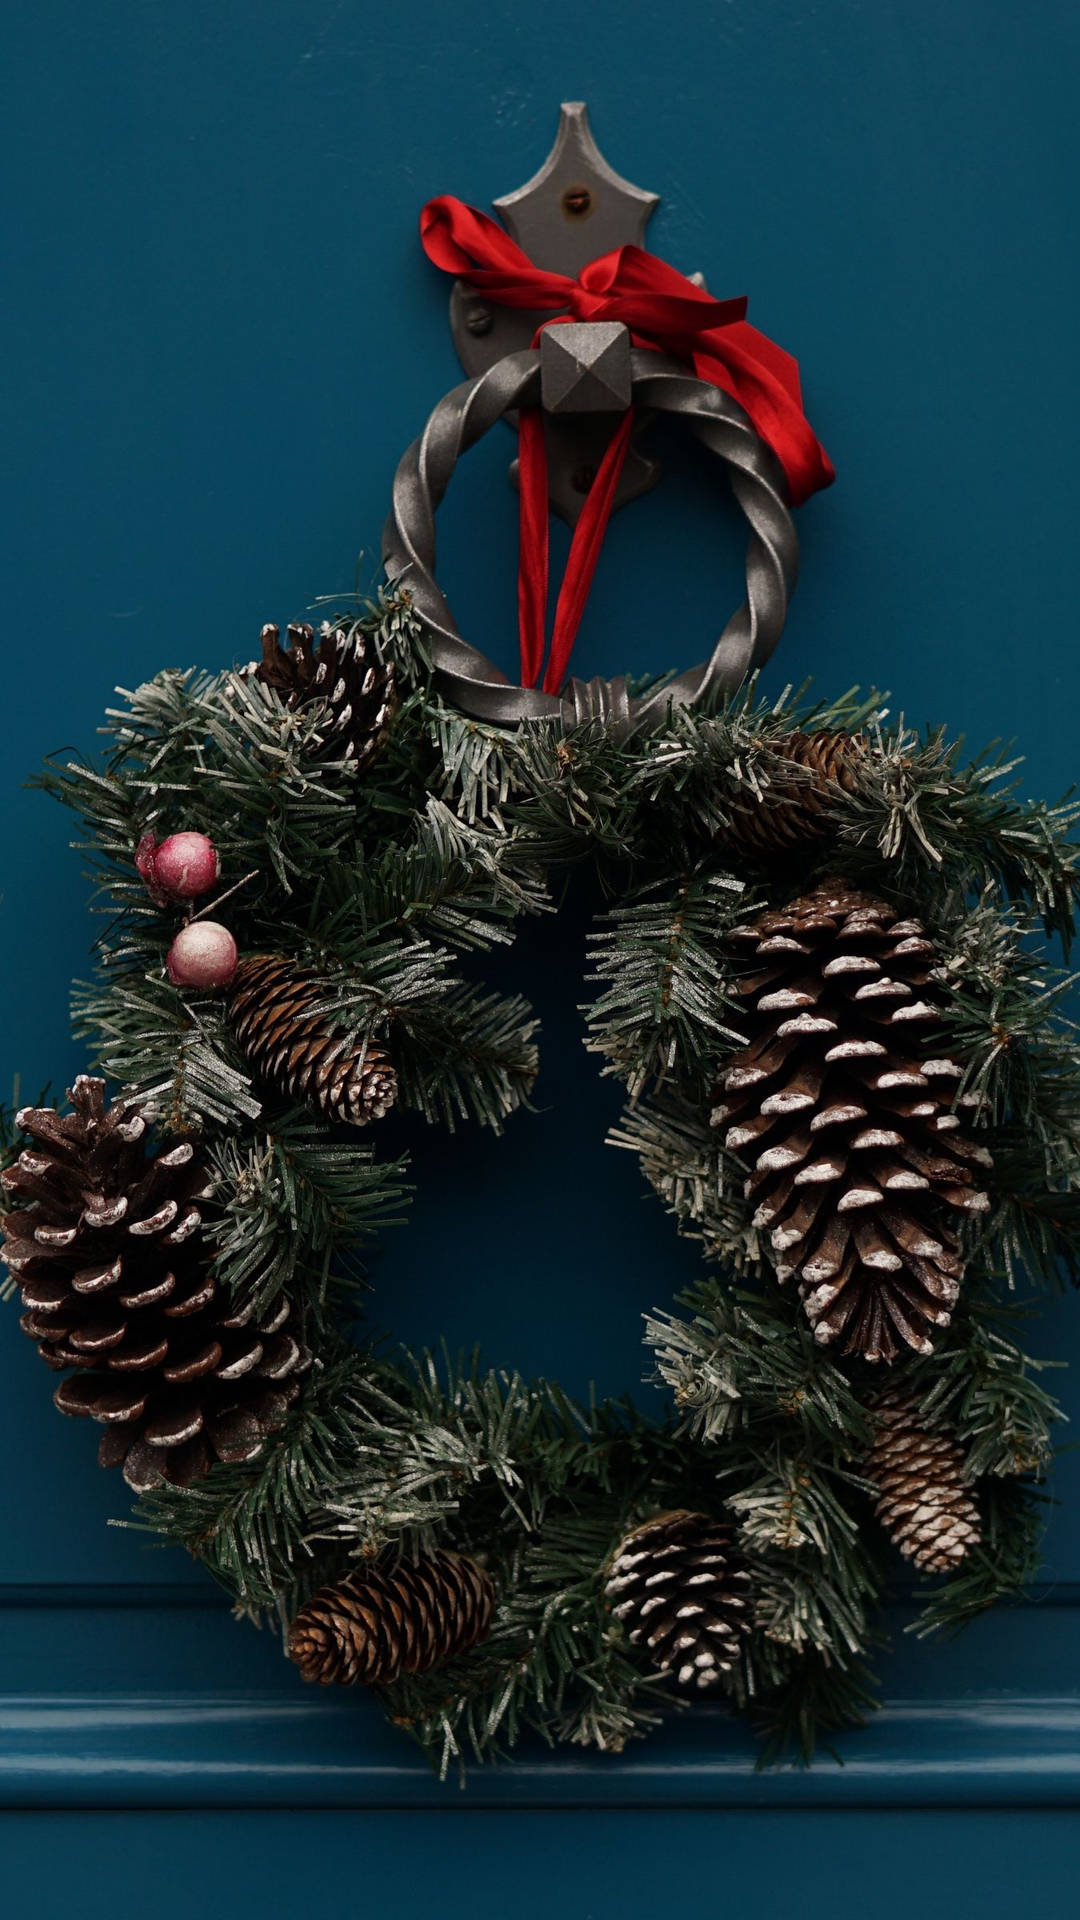 Caption: Festive Christmas Wreath Embellished With Pinecones